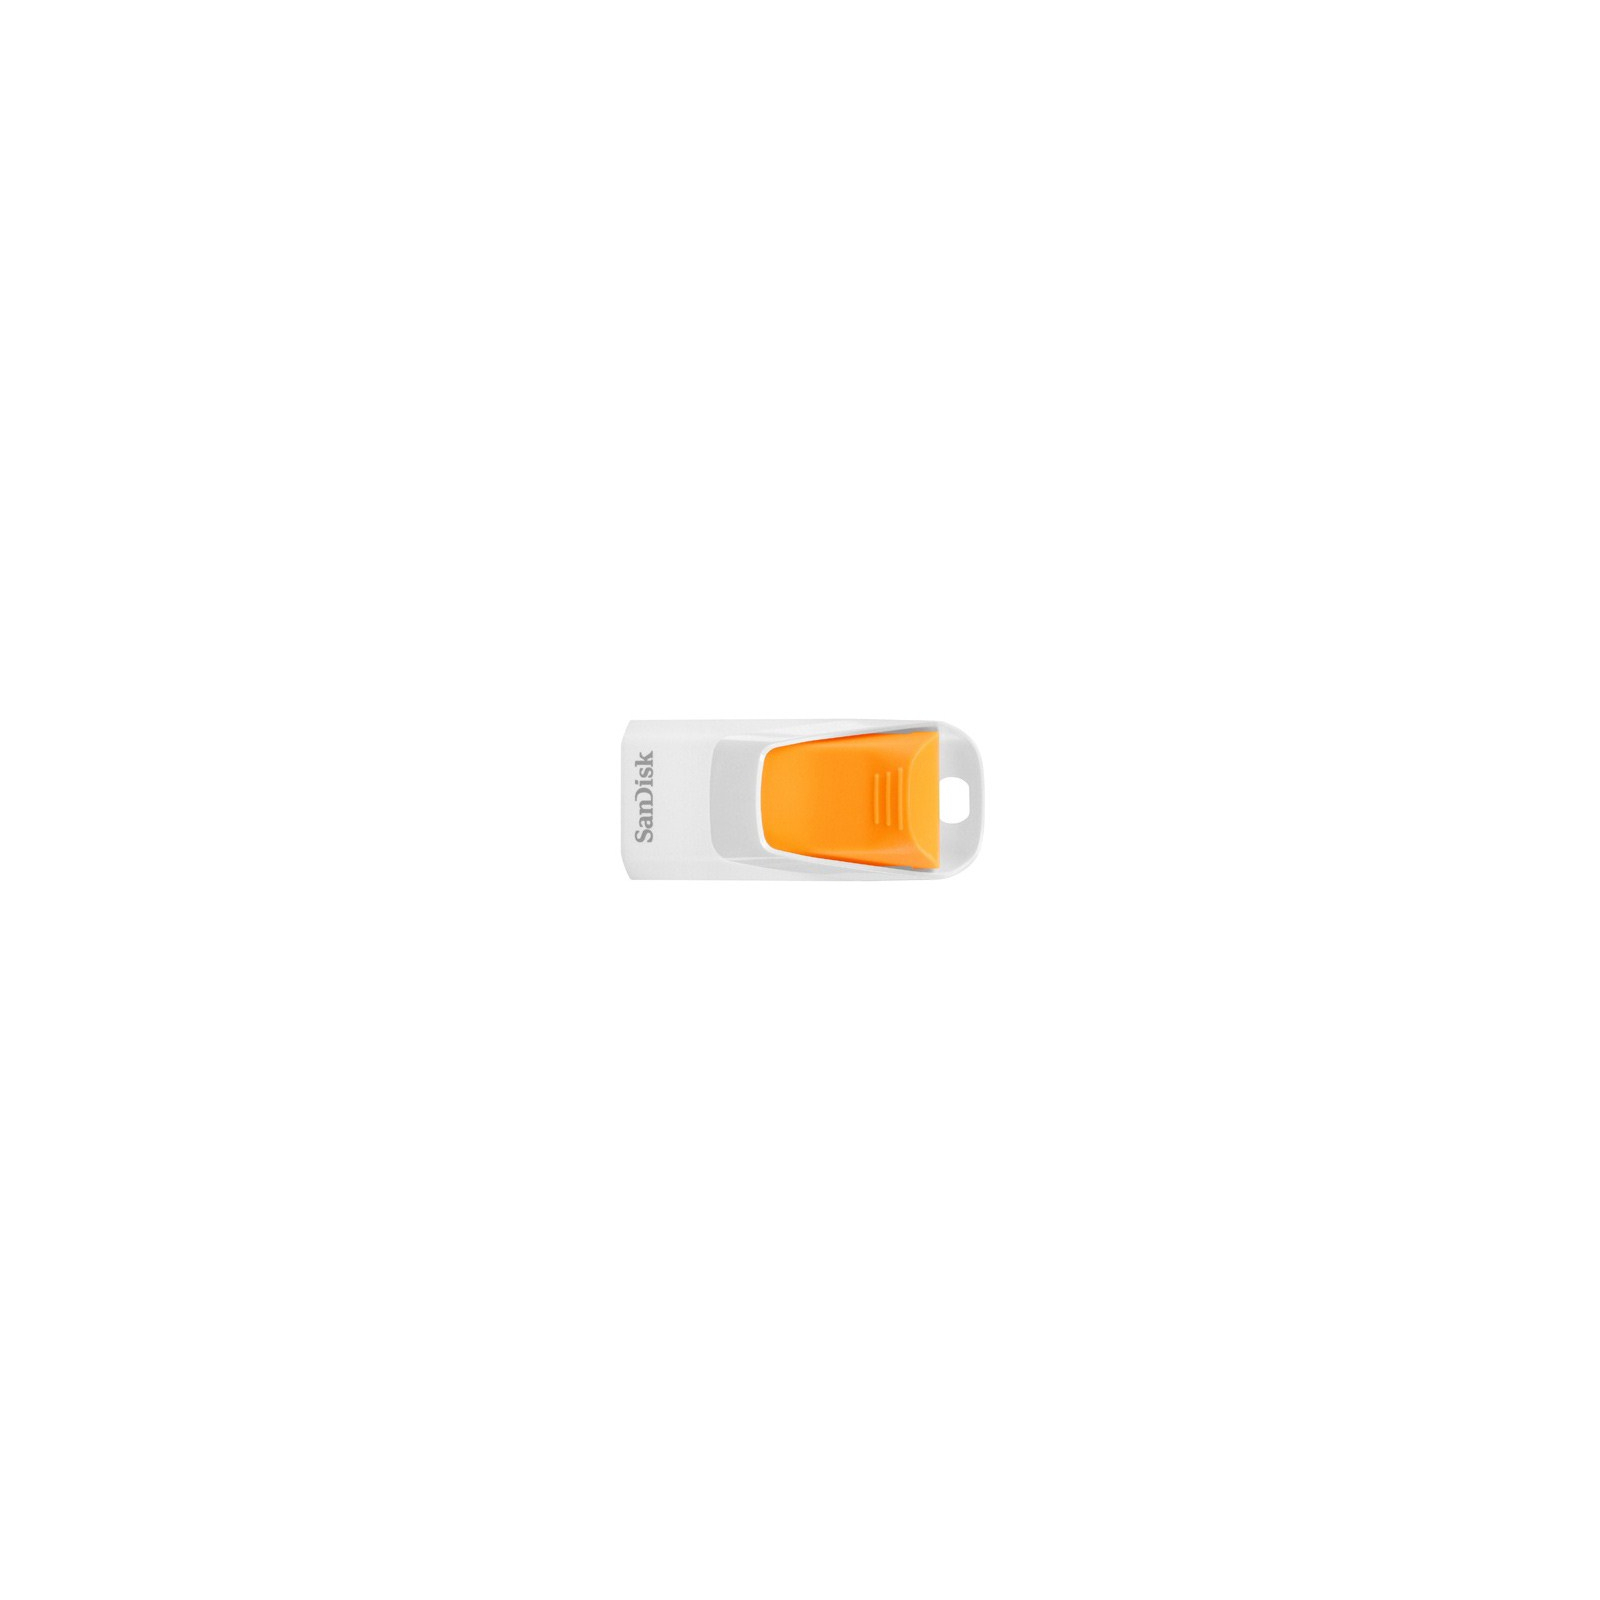 USB флеш накопитель SanDisk 32Gb Cruzer Edge Orange (SDCZ51W-032G-B35O)